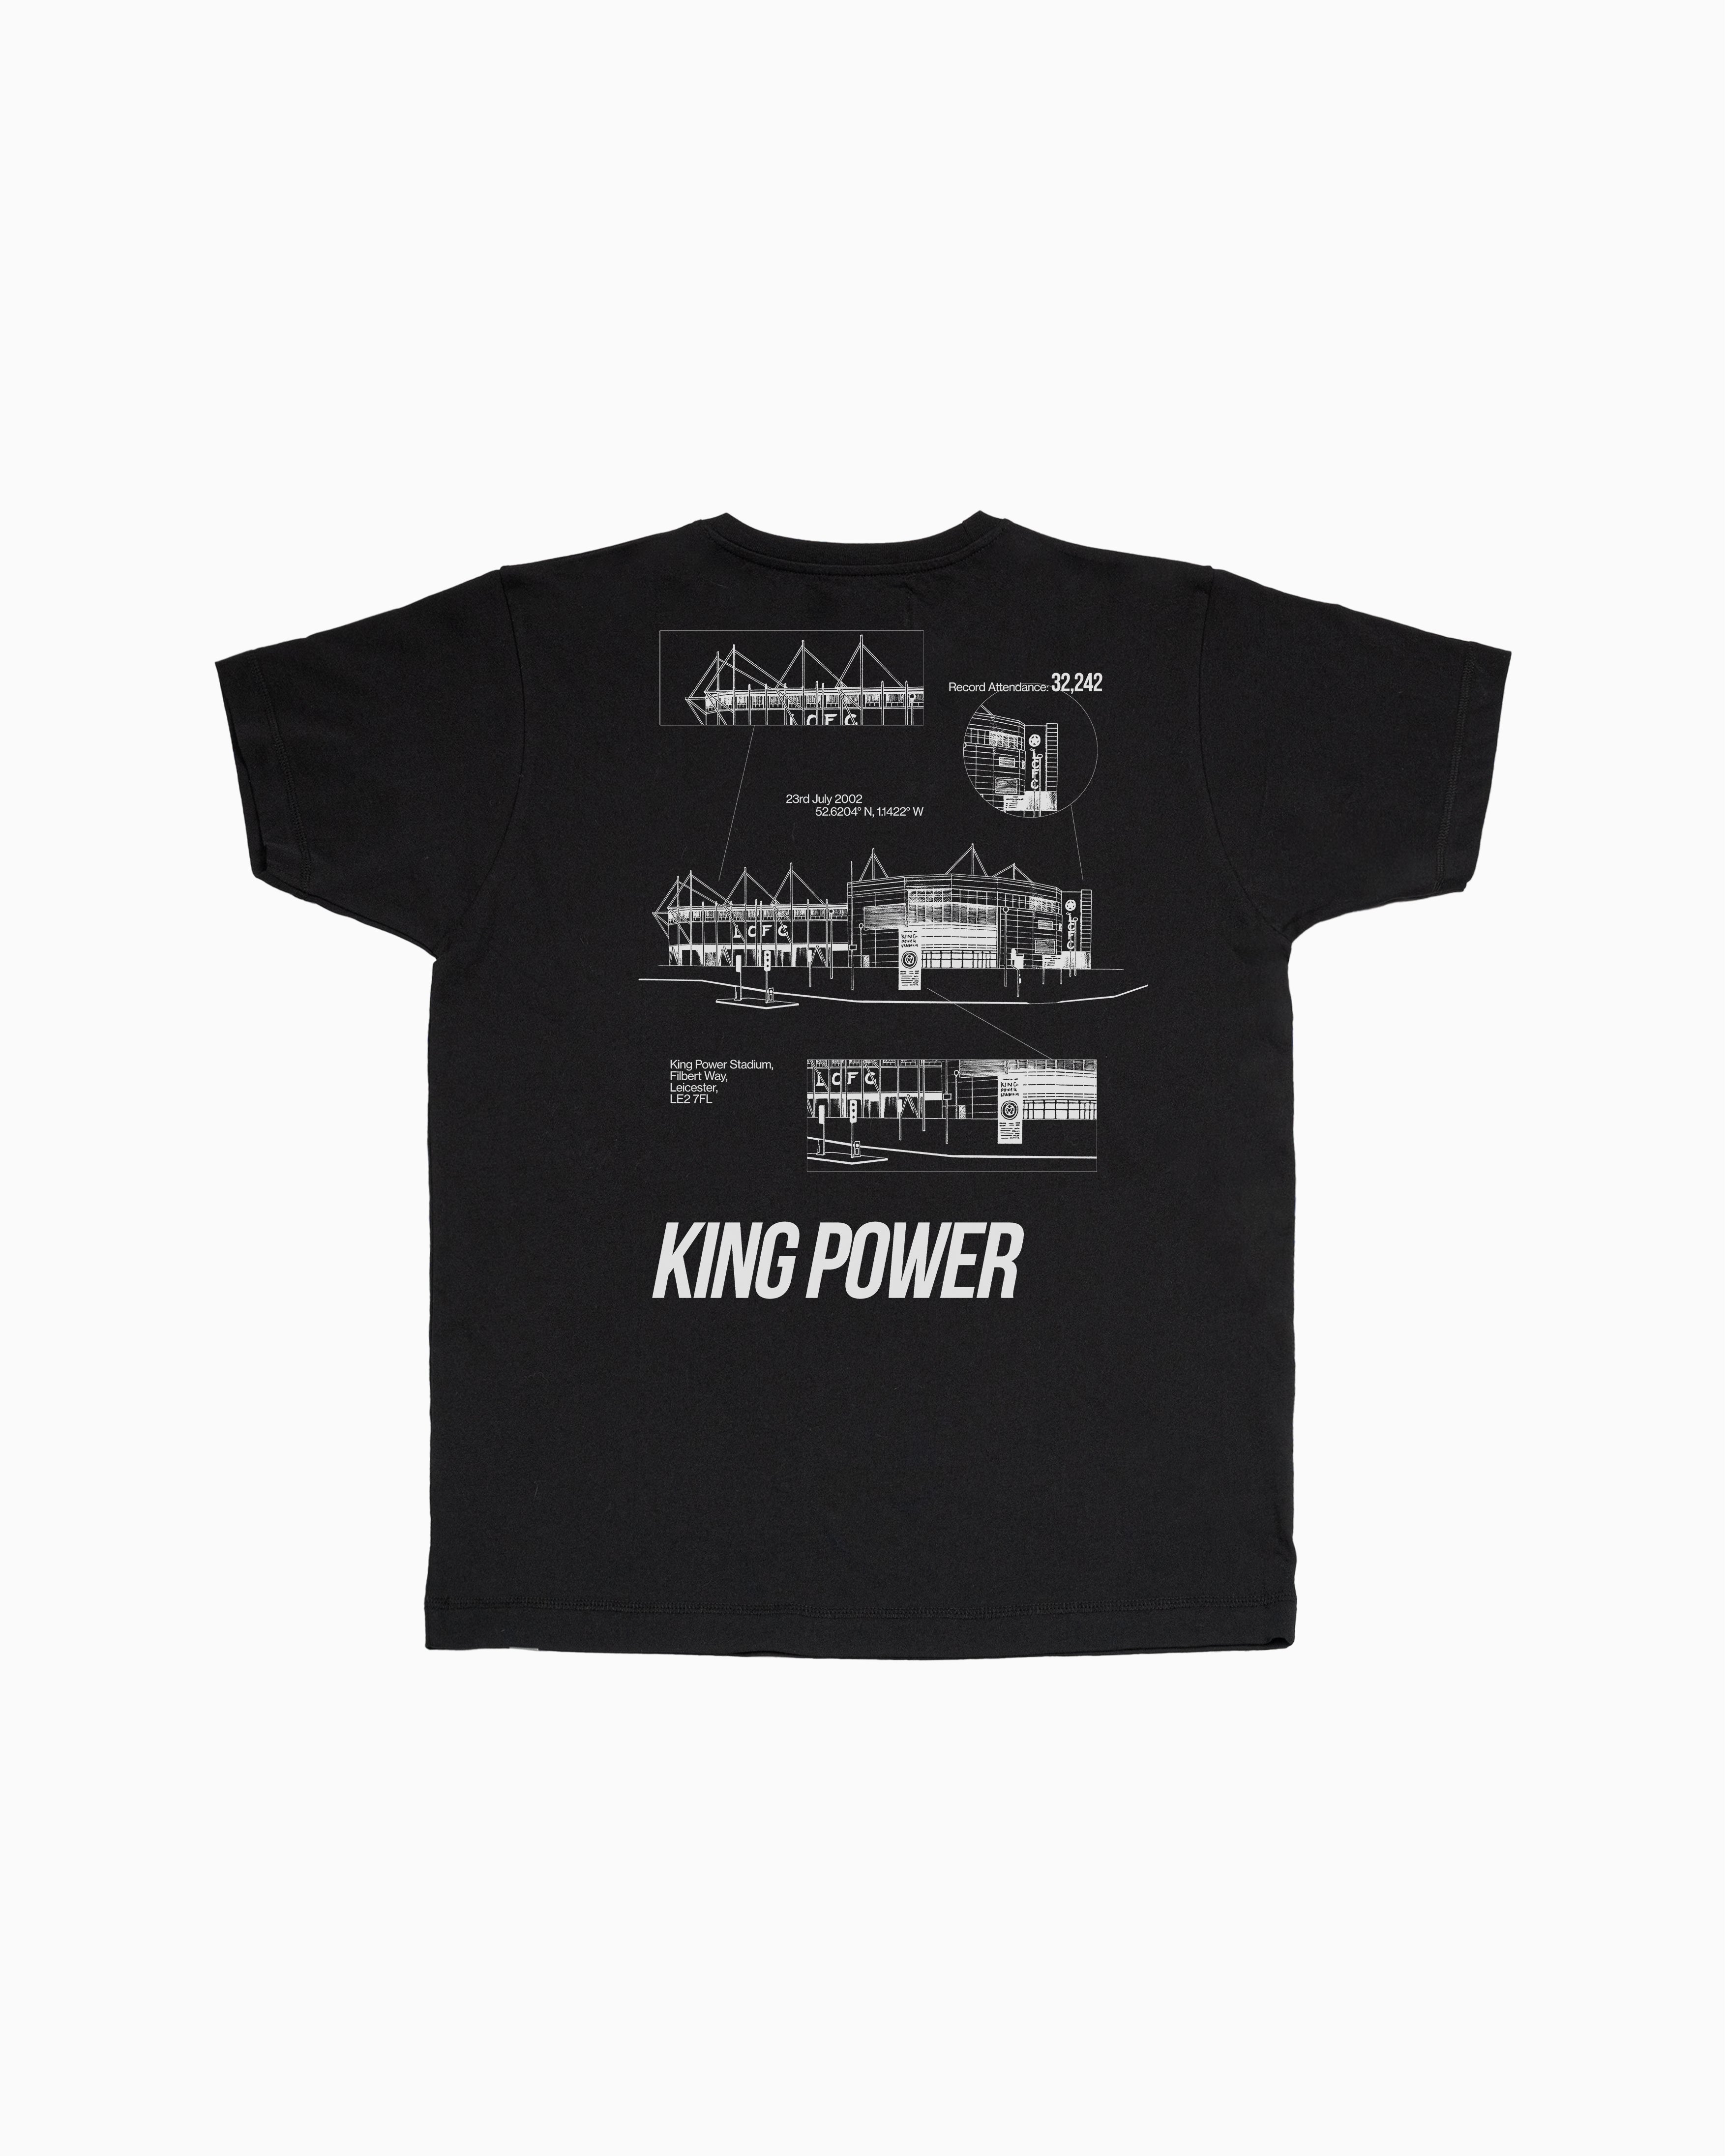 King Power Blueprint - Tee or Sweat